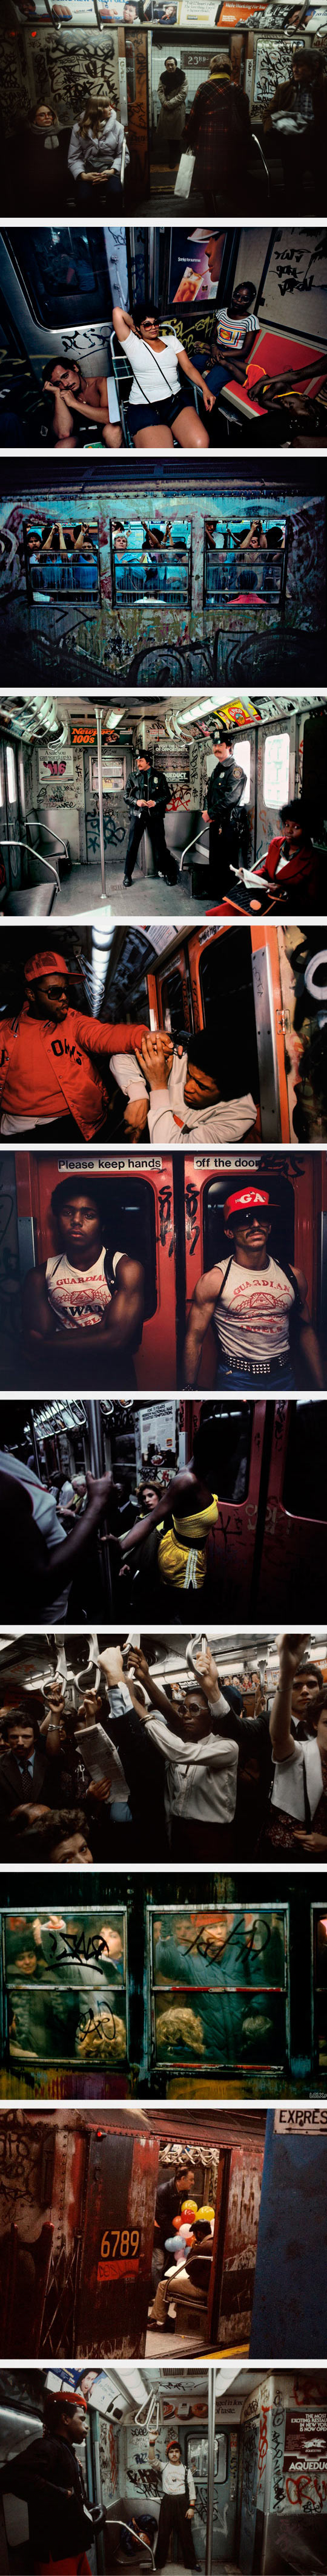 New York City Subway Photos Taken In The 80s